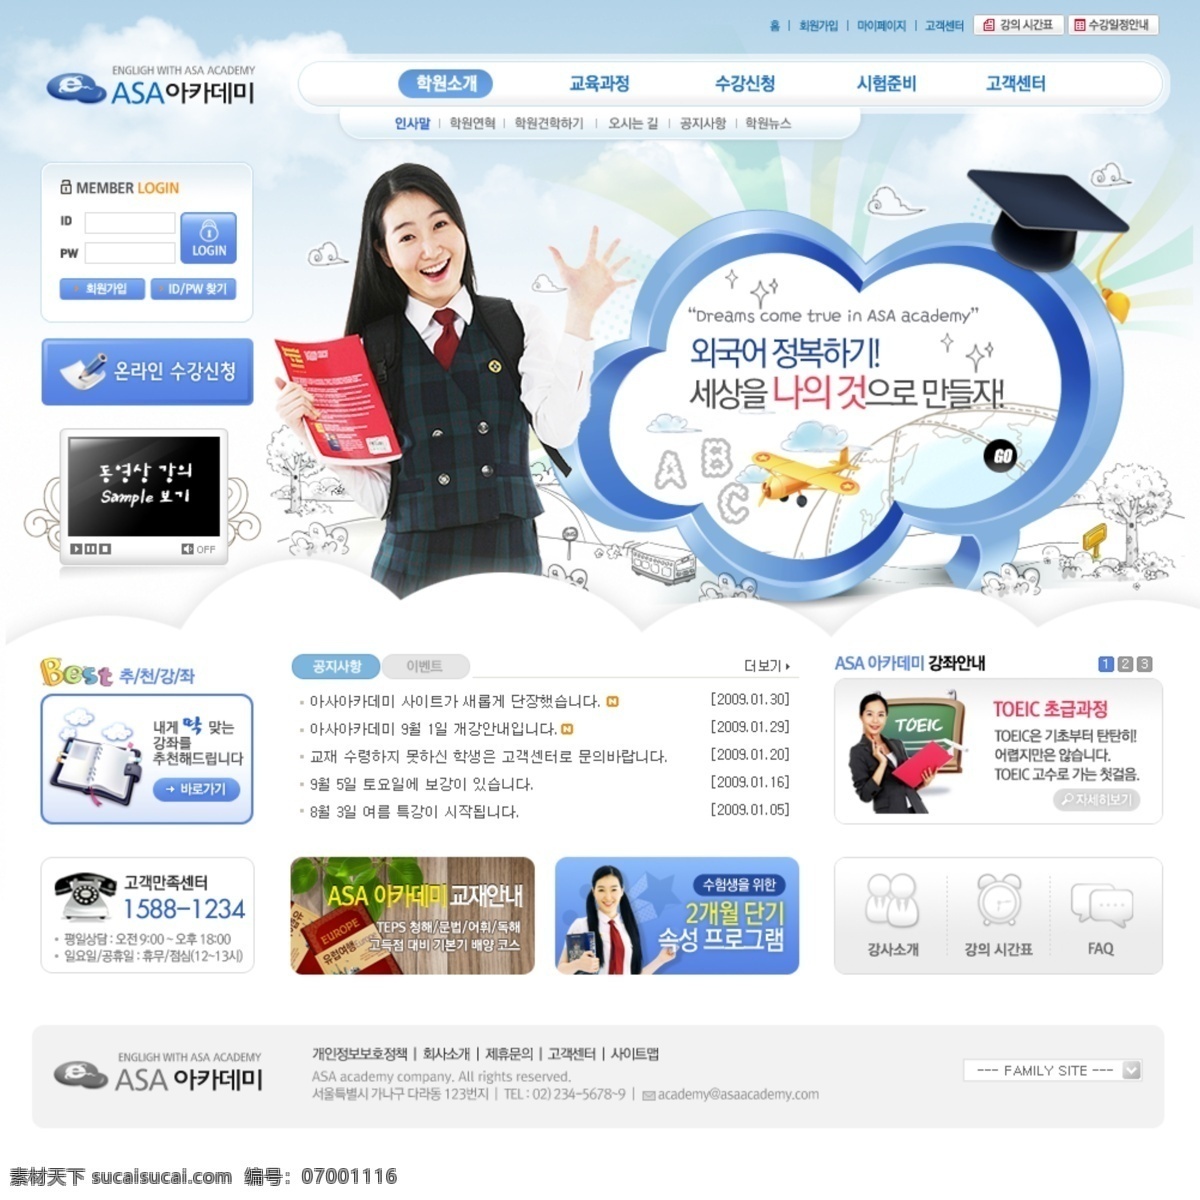 ui 高级 网页模板 网页素材 学校 英文 幼儿教育 教育 网页设计 网页设计ui 韩文模板 源文件 网页 web 界面设计 其他网页素材